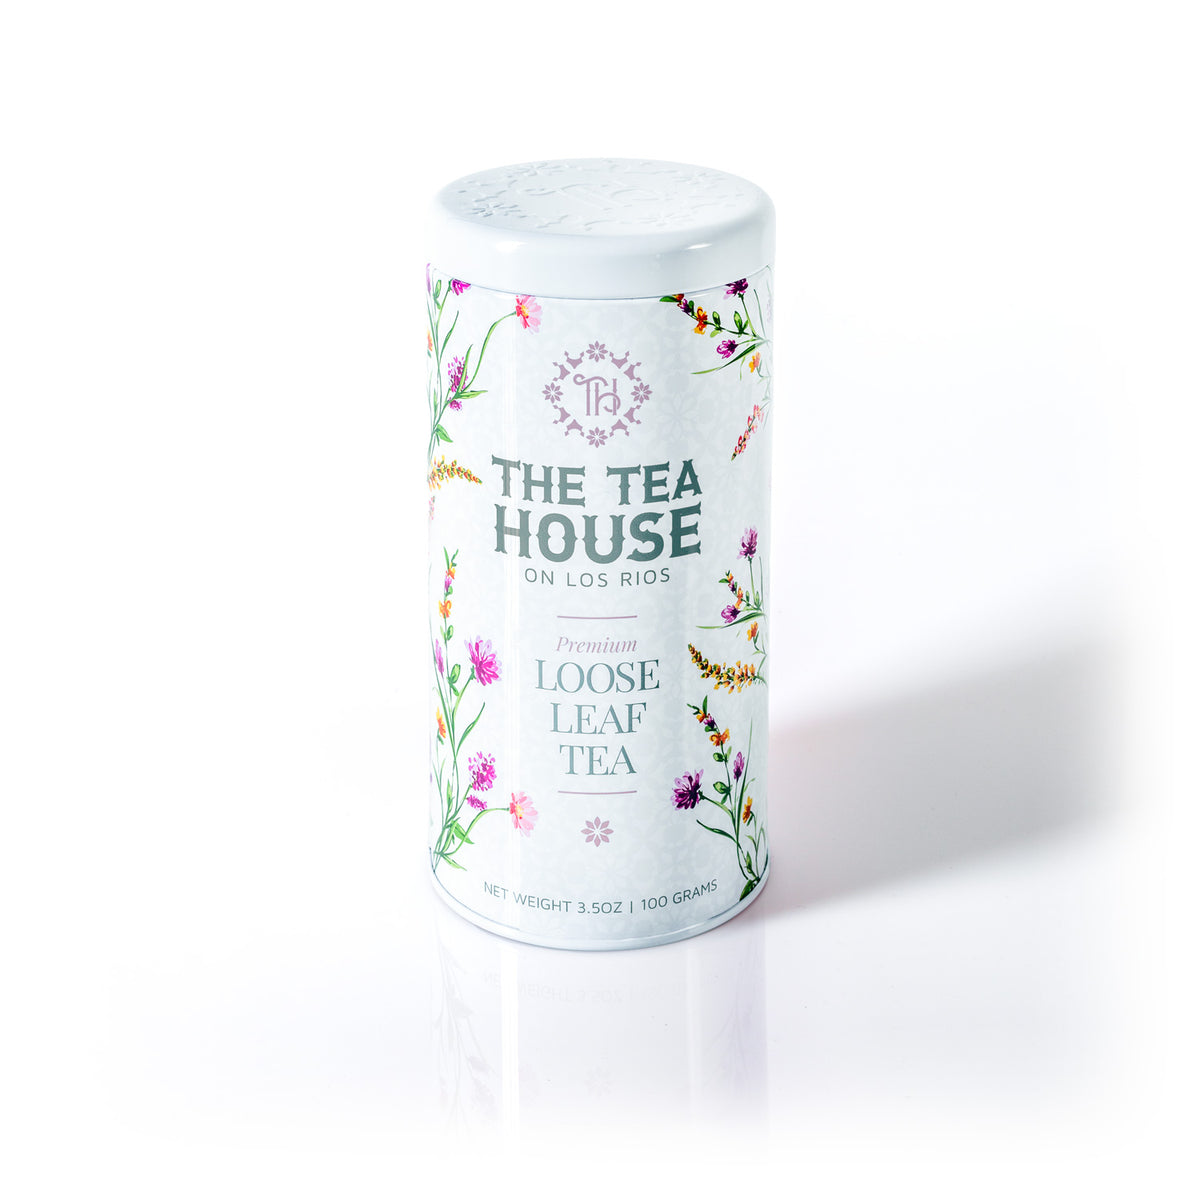 100g Loose Leaf Tea Tin - The Tea House on Los Rios Exclusive